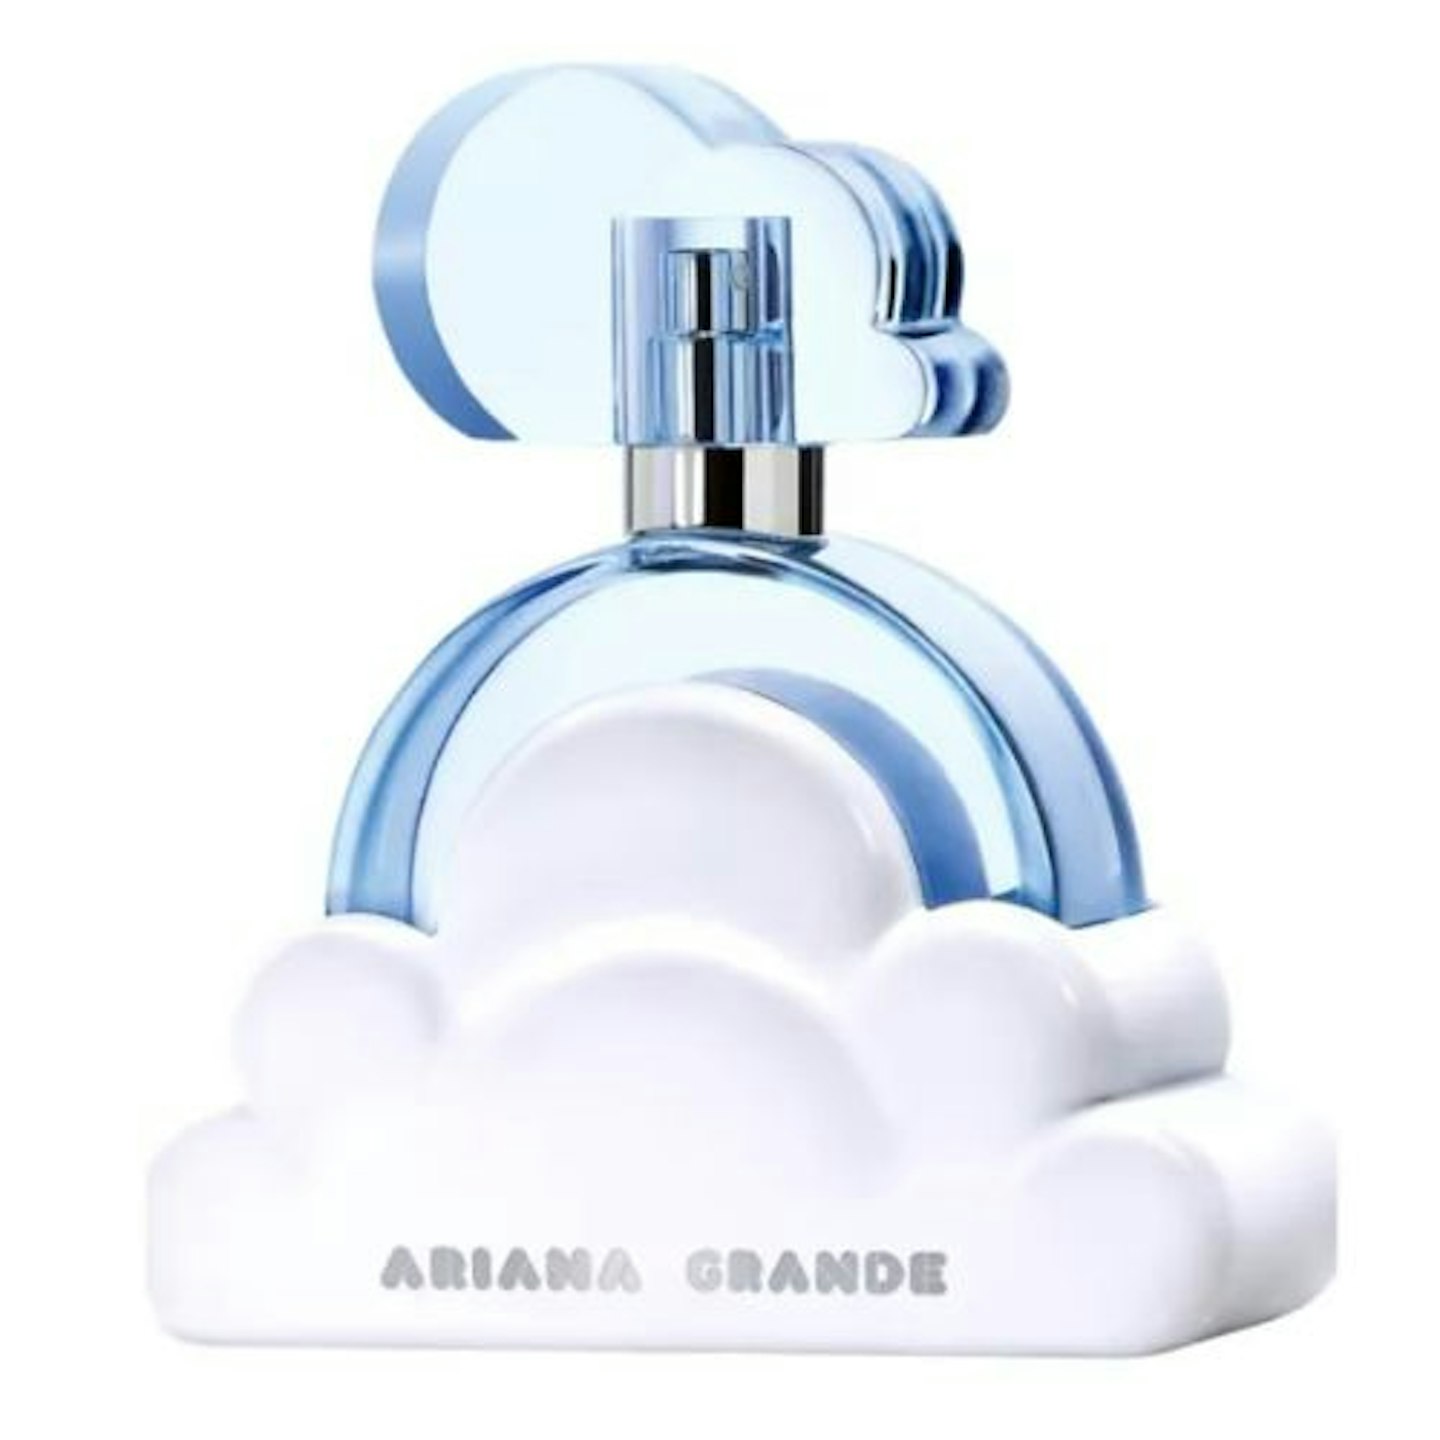 Ariana Grande Cloud Eau de Pafum Spray 30ml